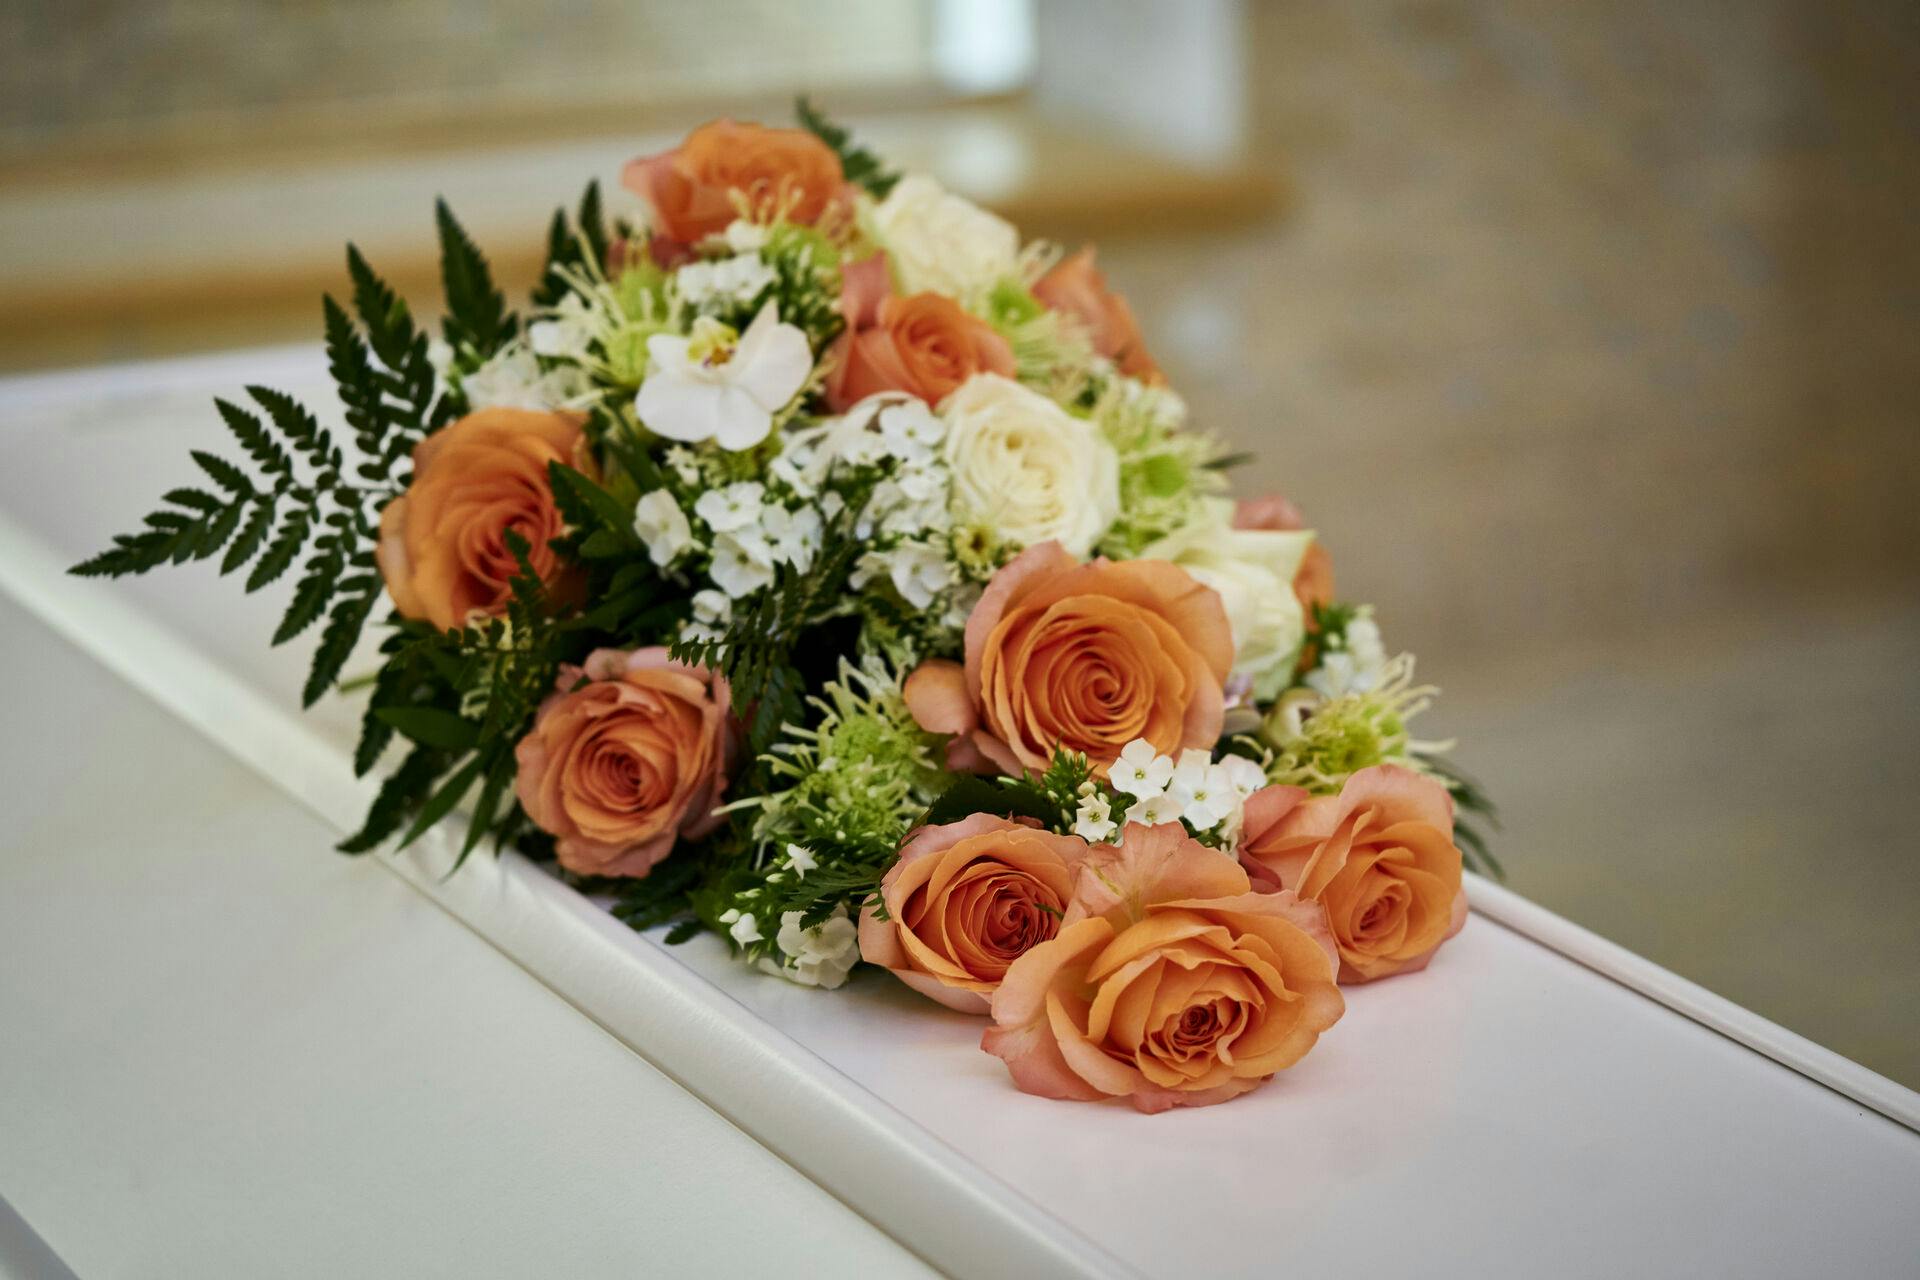 Kiste med blomster i kapel. Sjælland den 14. juni 2021